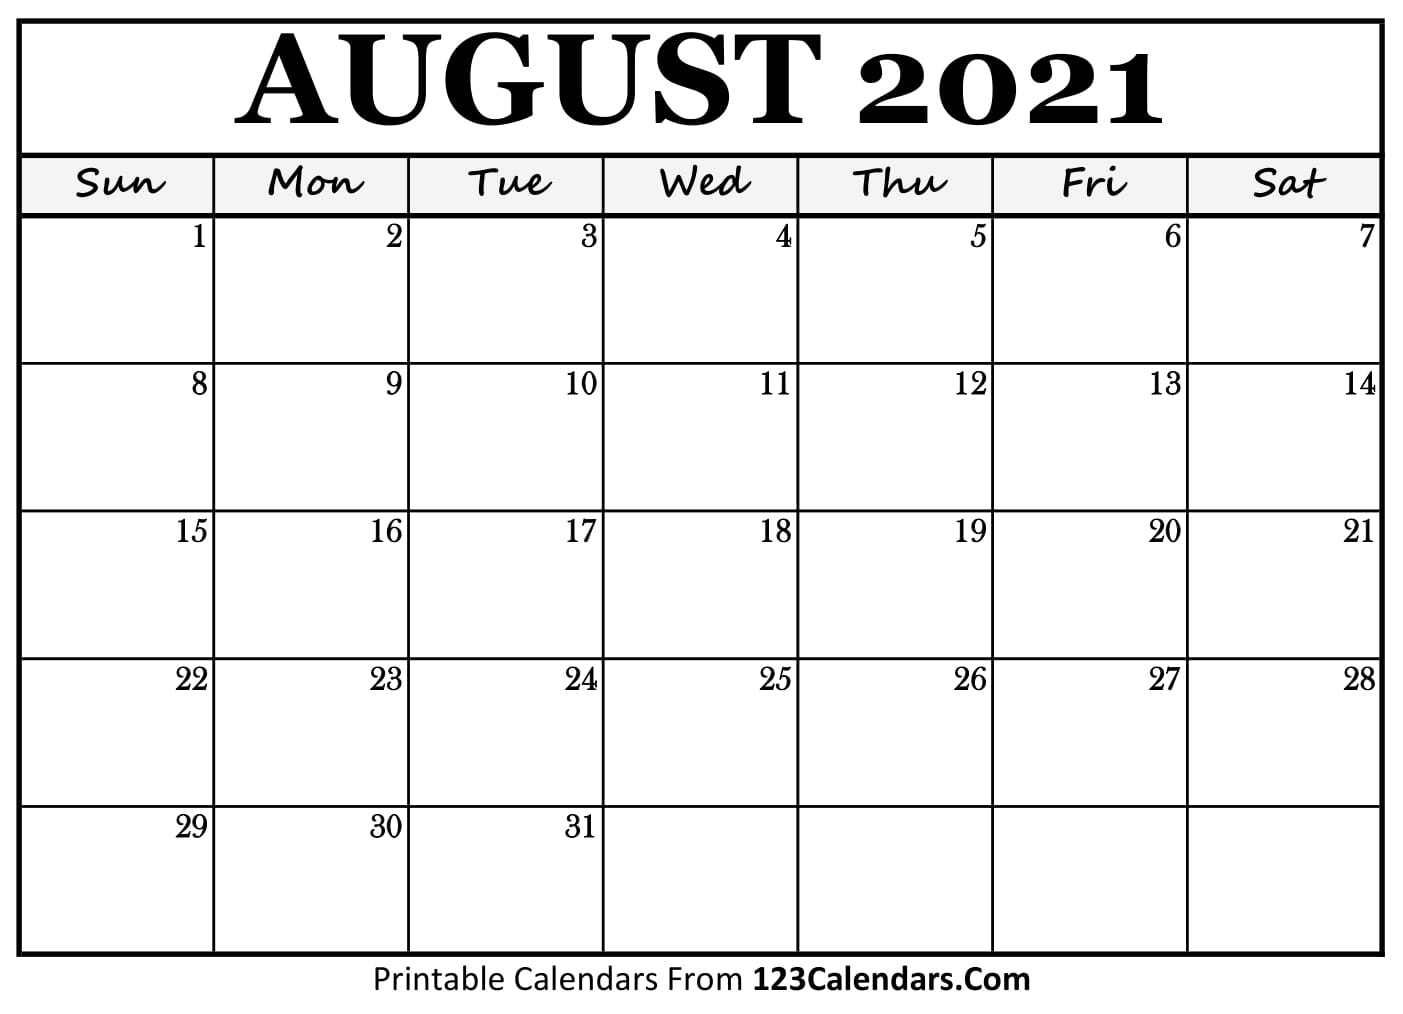 Printable August 2021 Calendar Templates - 123Calendars